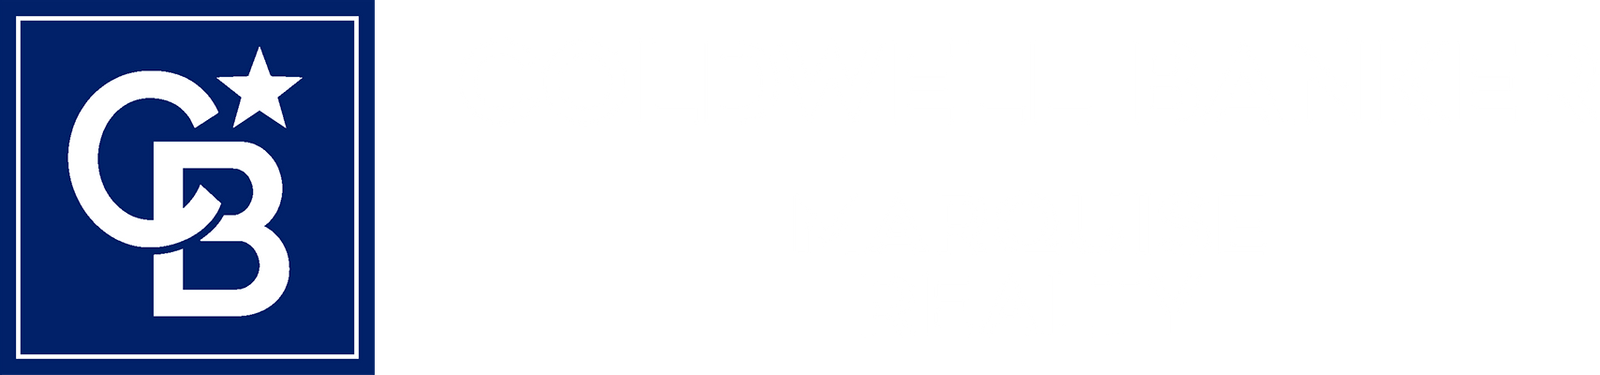 Coldwell Banker Logo White